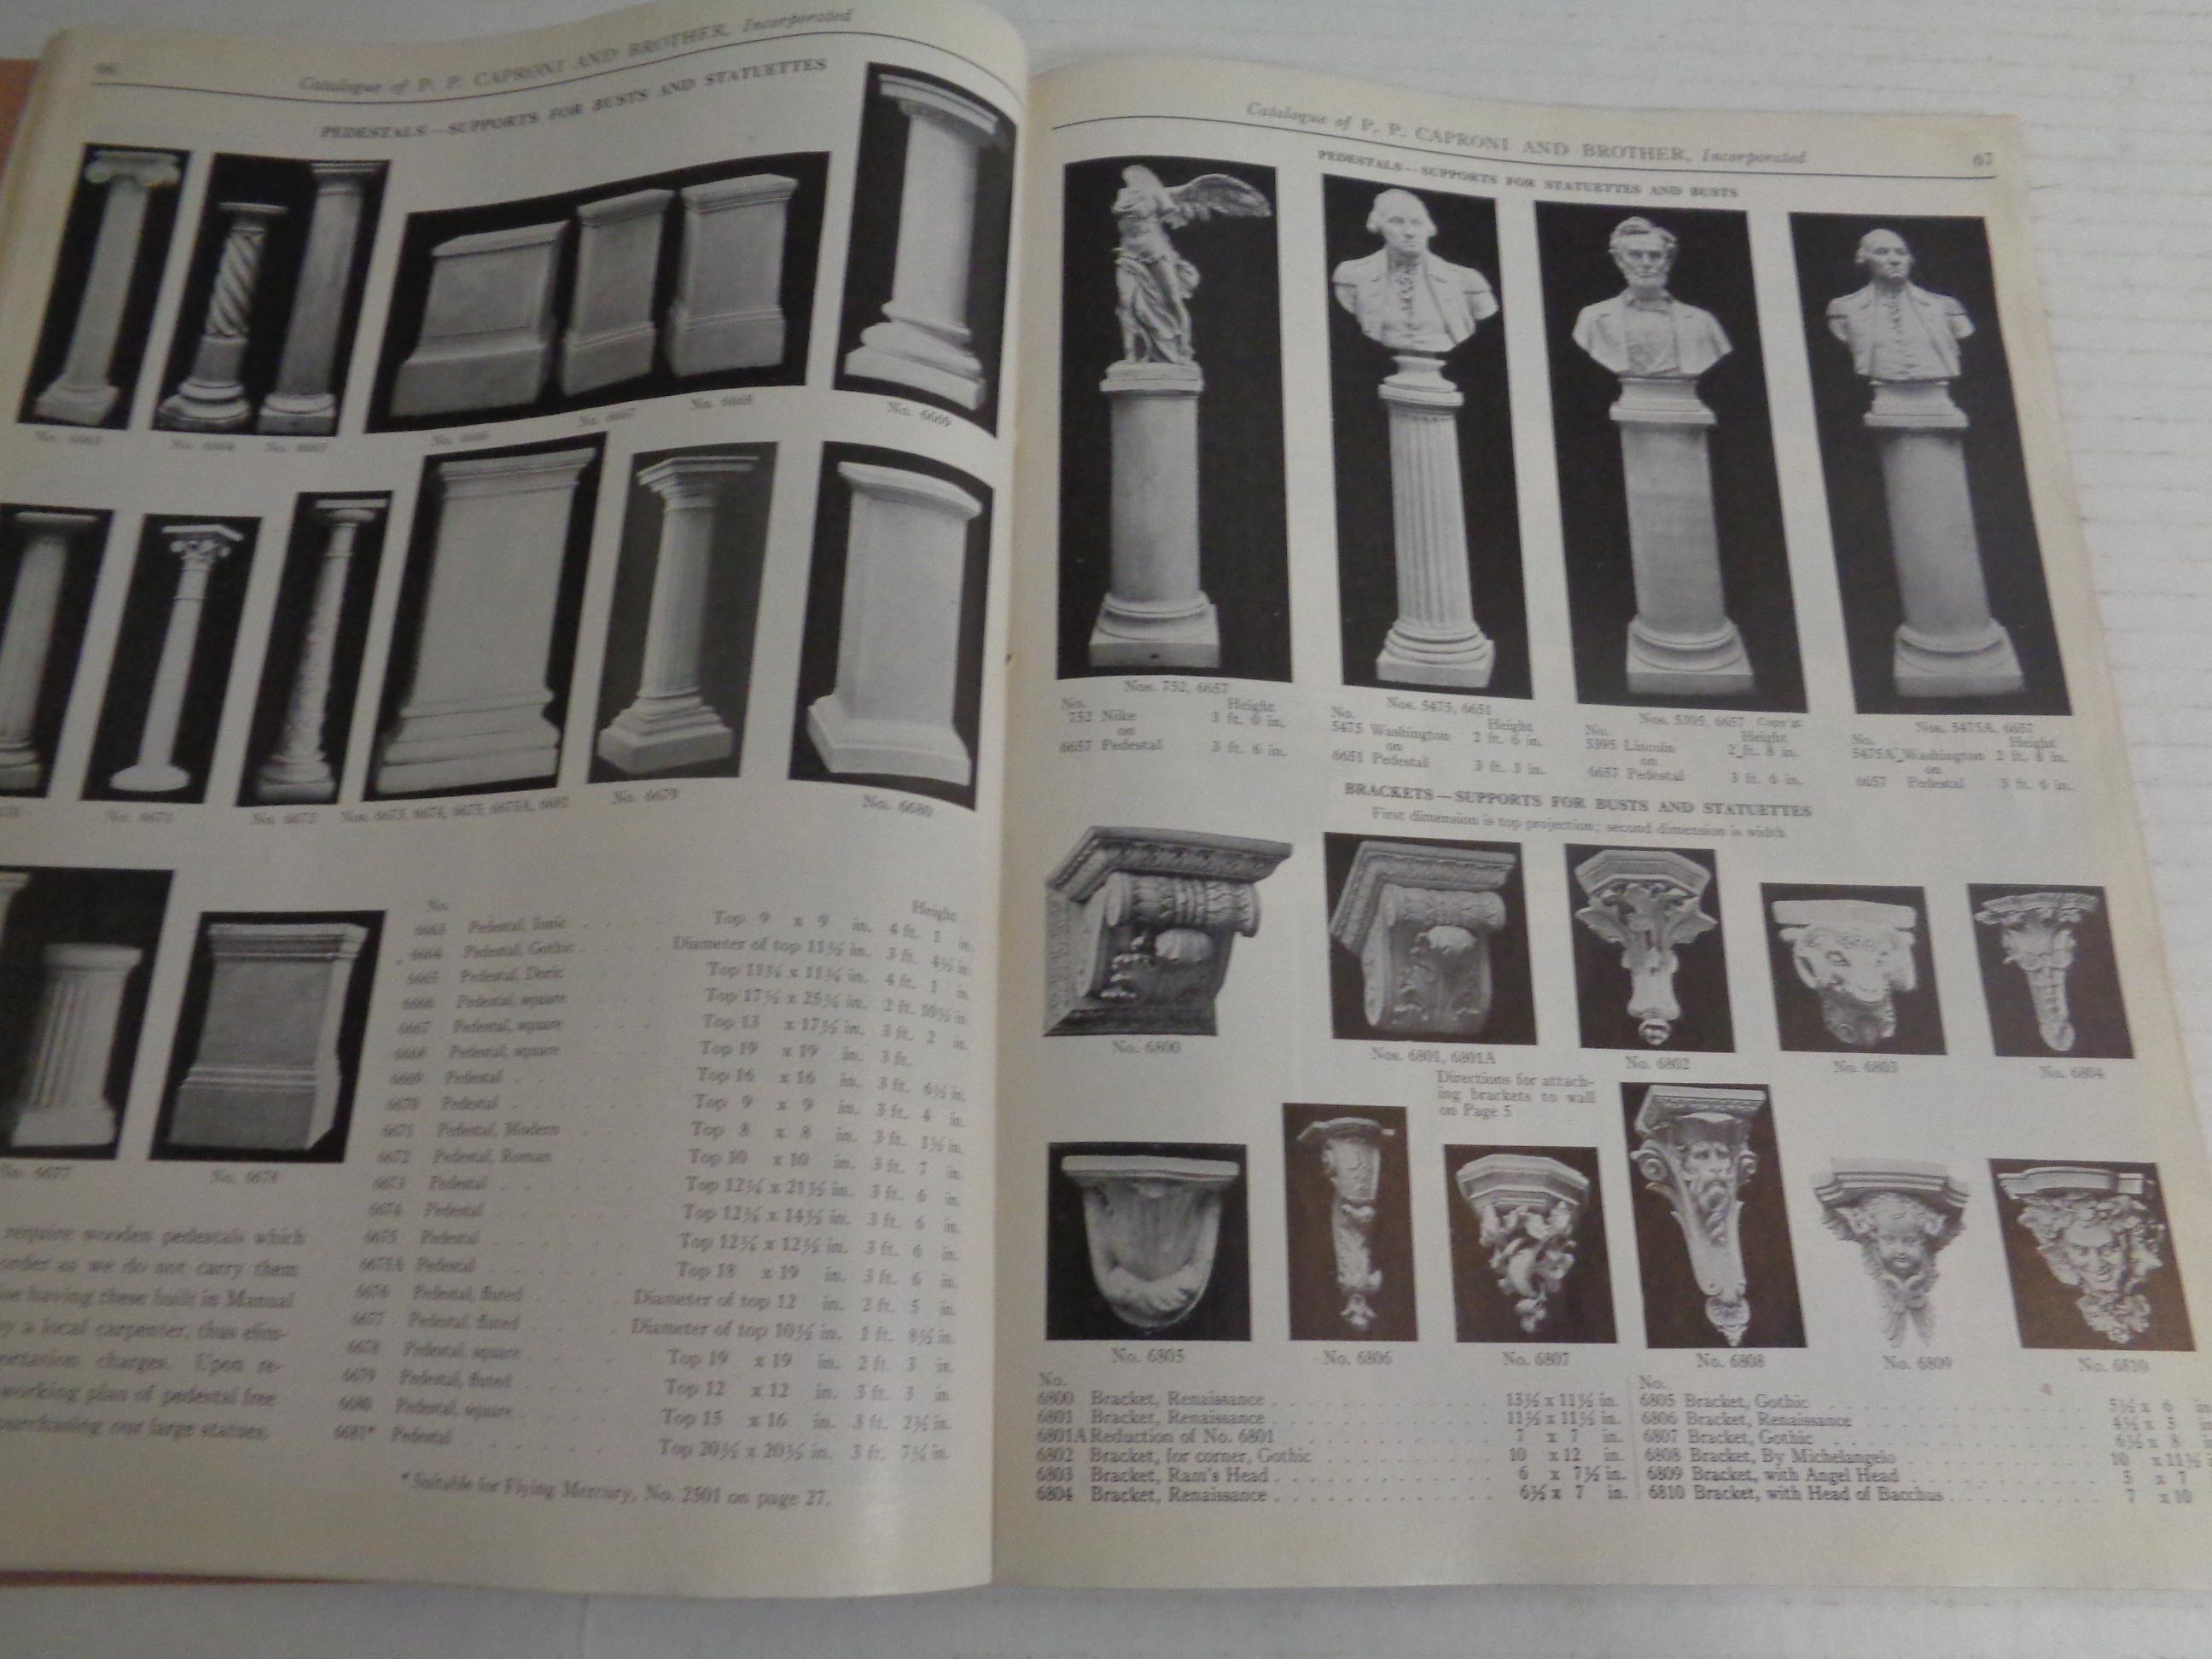 Paper Caproni Casts: Masterpieces of Sculpture - 1932 Caproni Brothers Catalogue  For Sale